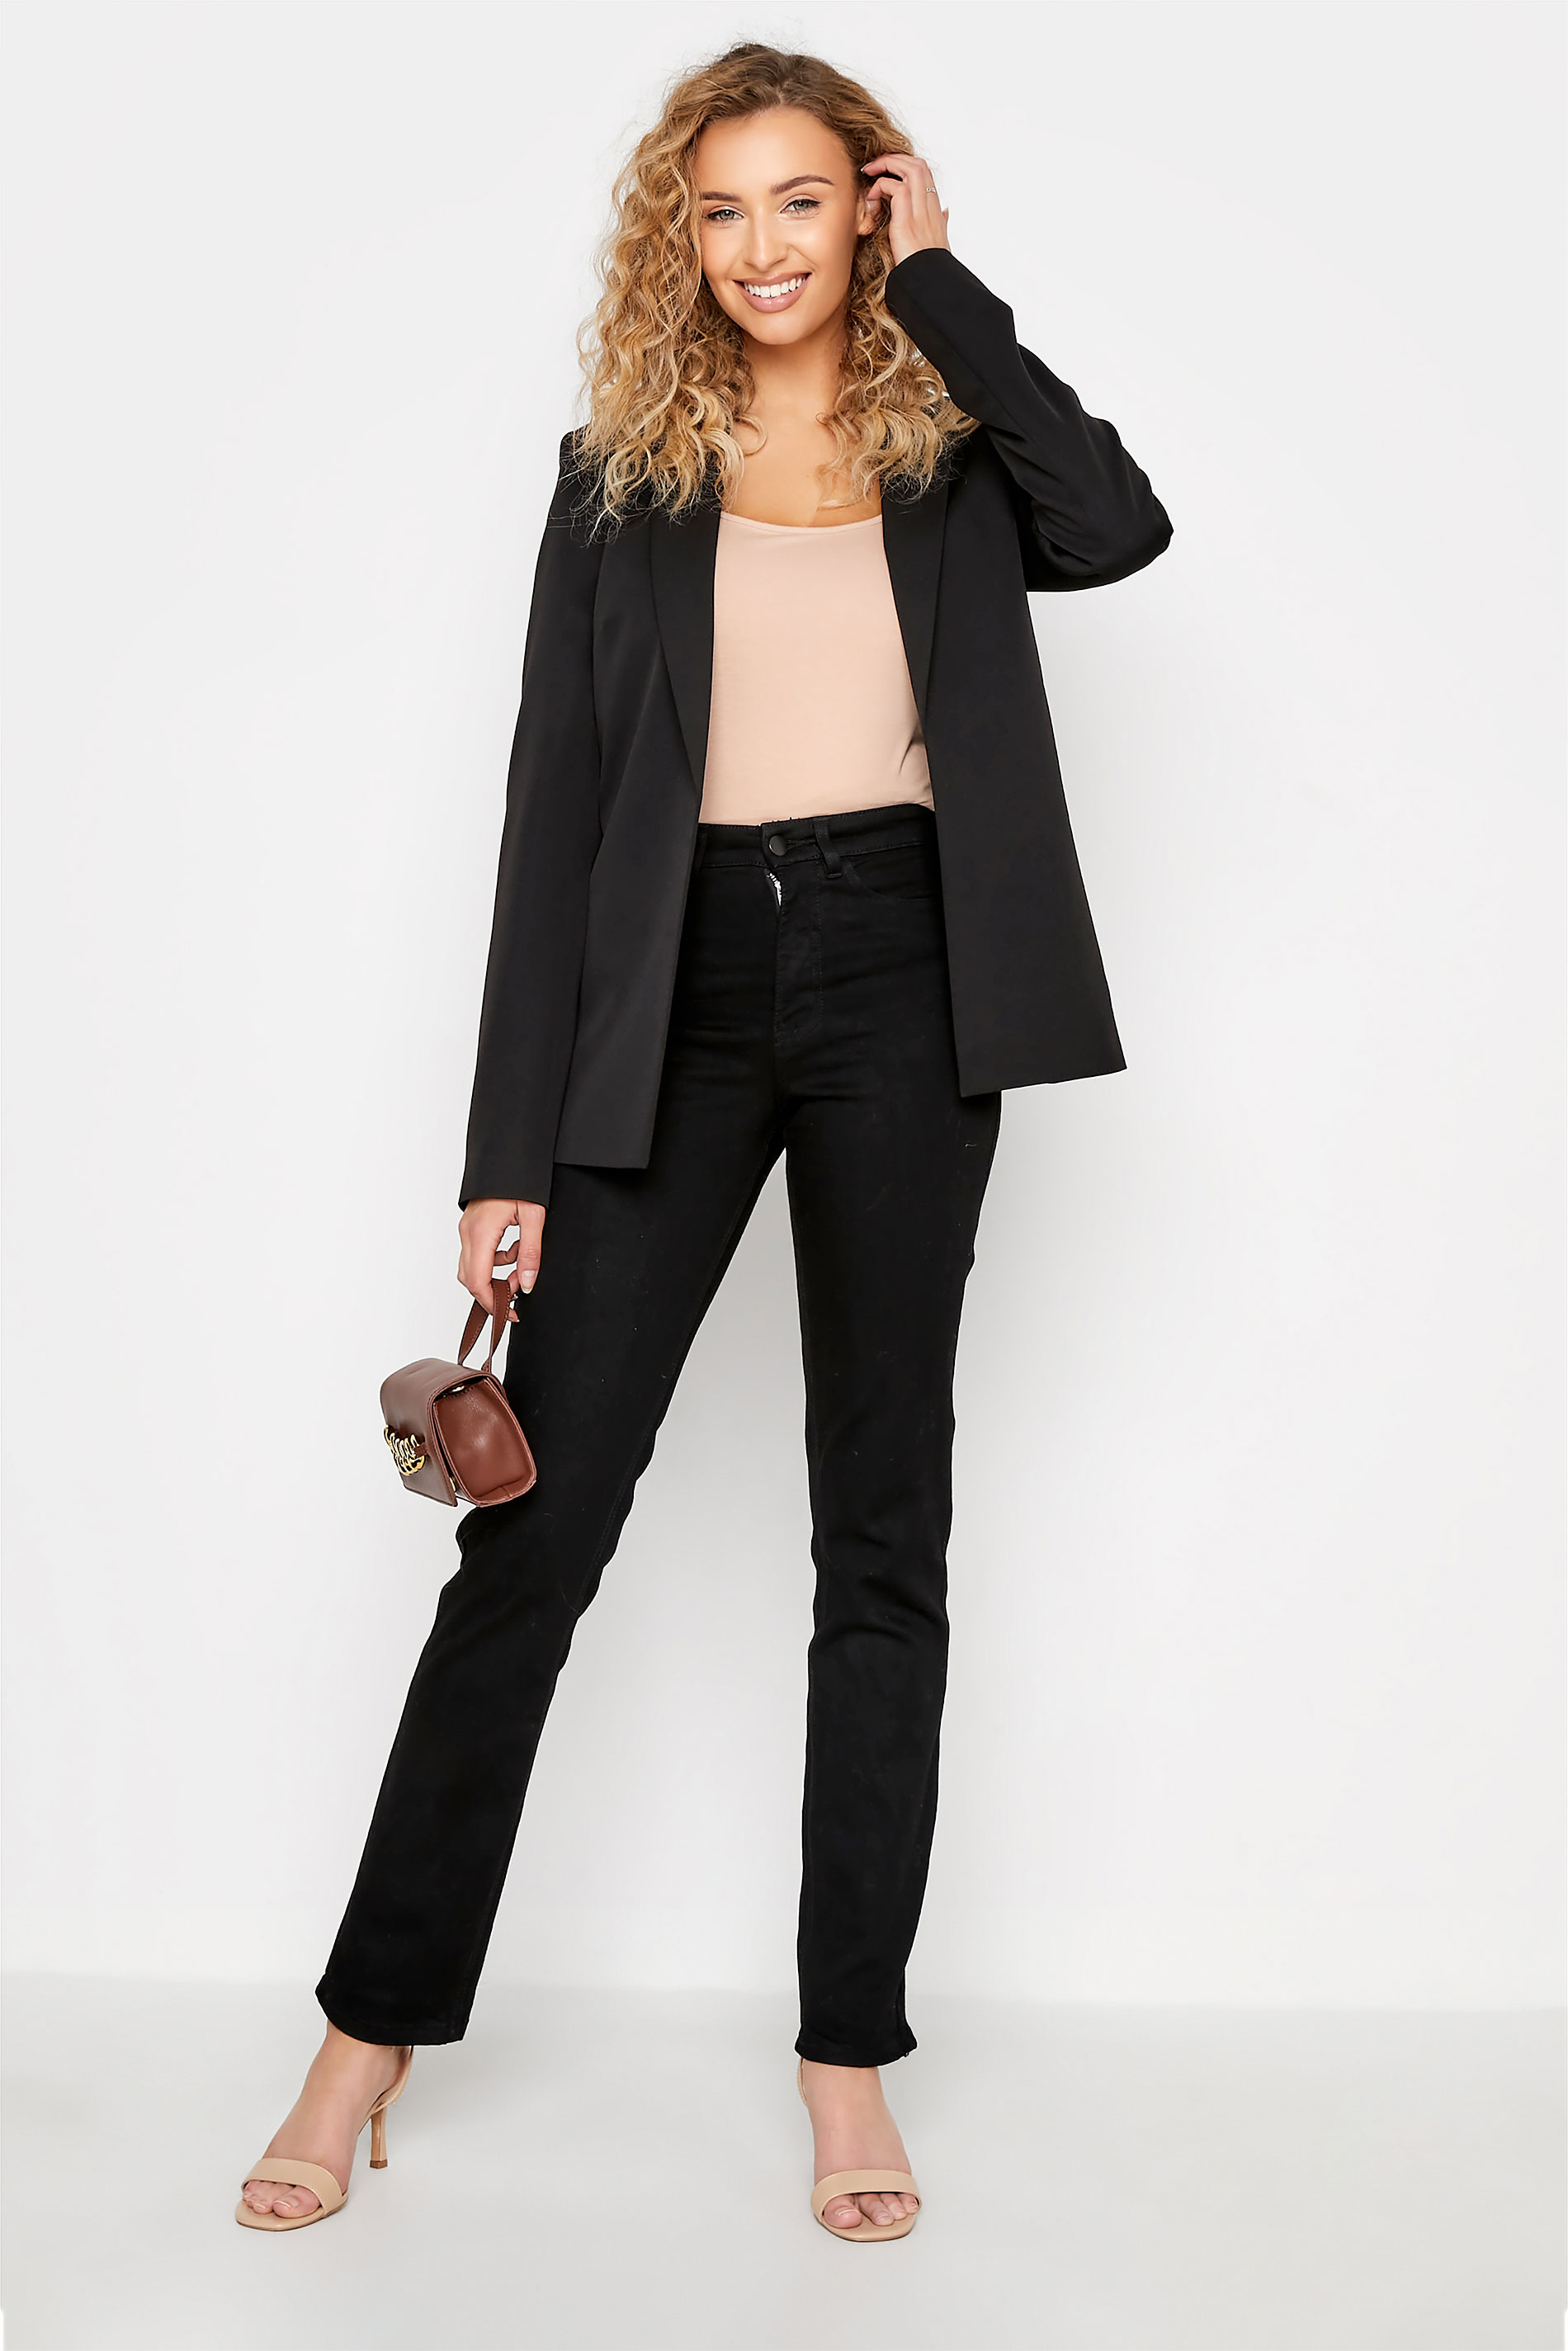 Tall Women's LTS Black Blazer | Long Tall Sally 2